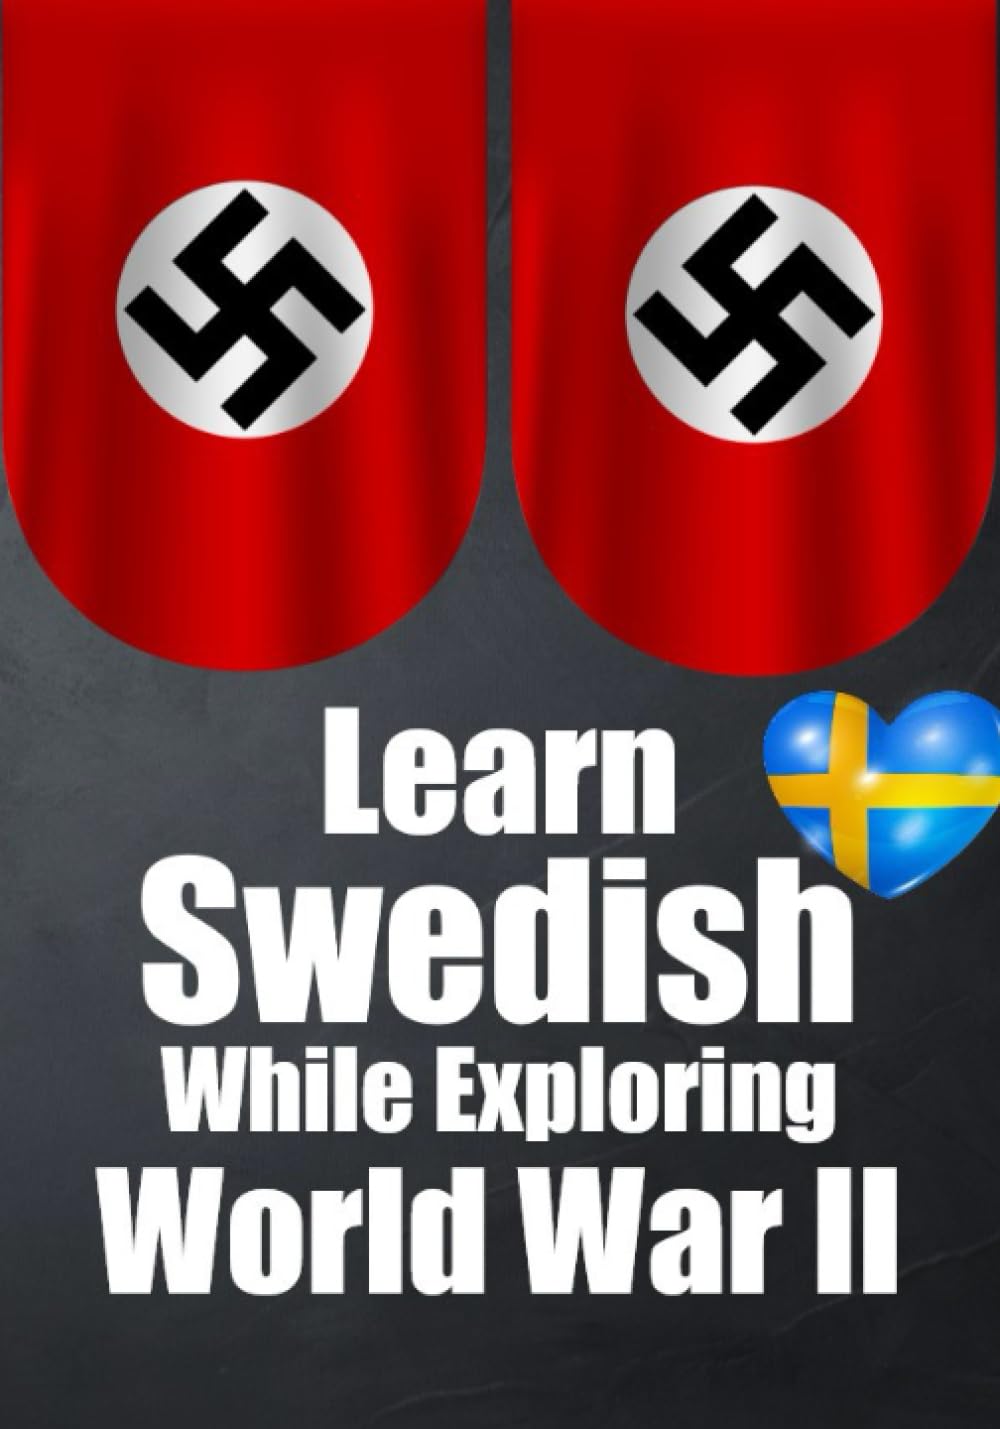 Learn Swedish While Exploring World War II: Swedish and English Narratives of World War II